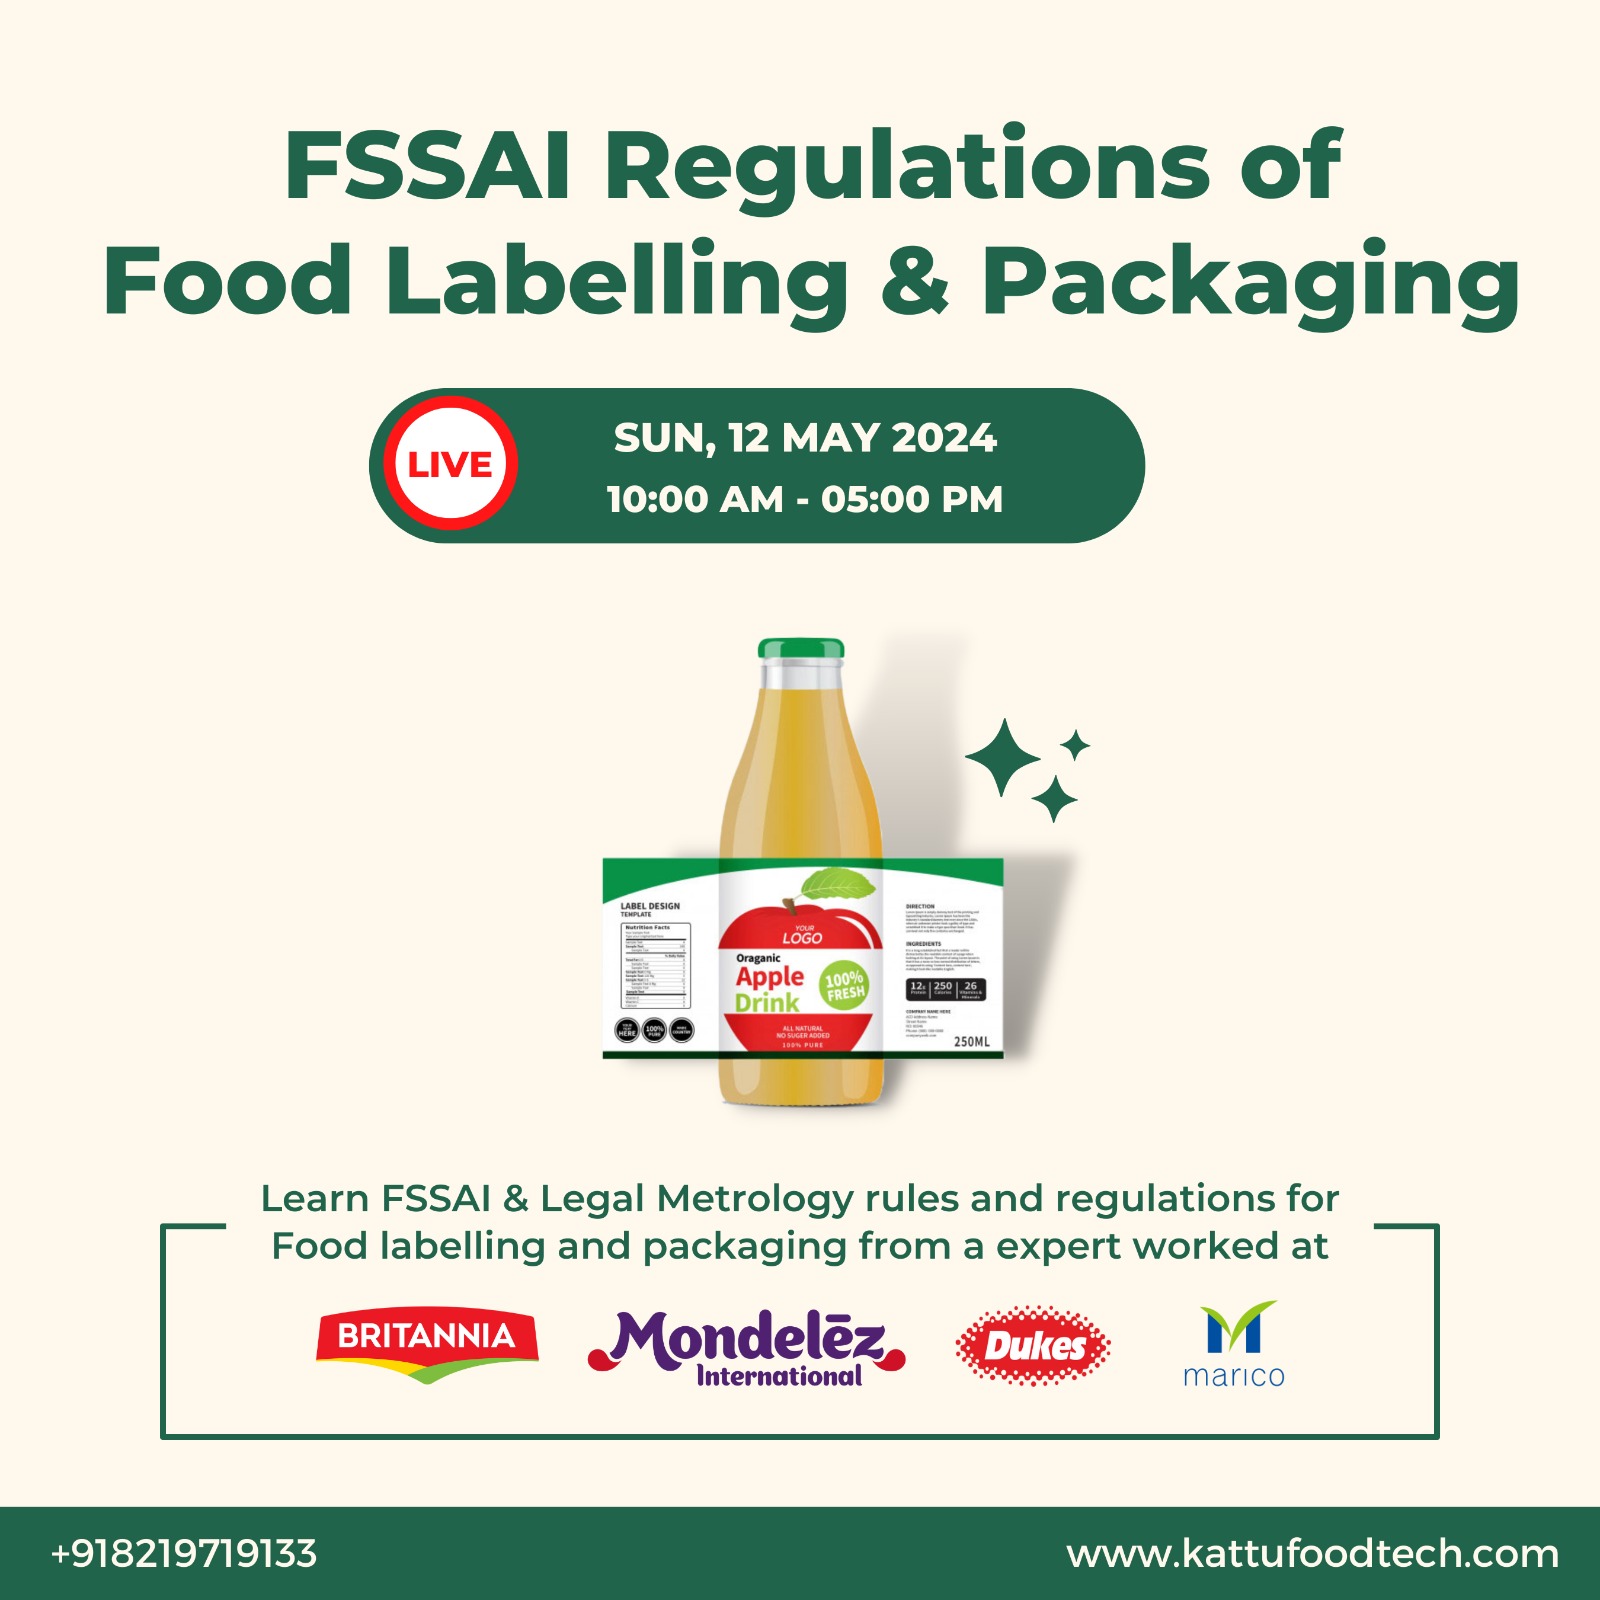 Labelling Display and Packaging Materials Regulations of FSSAI - MSME | kattufoodtech